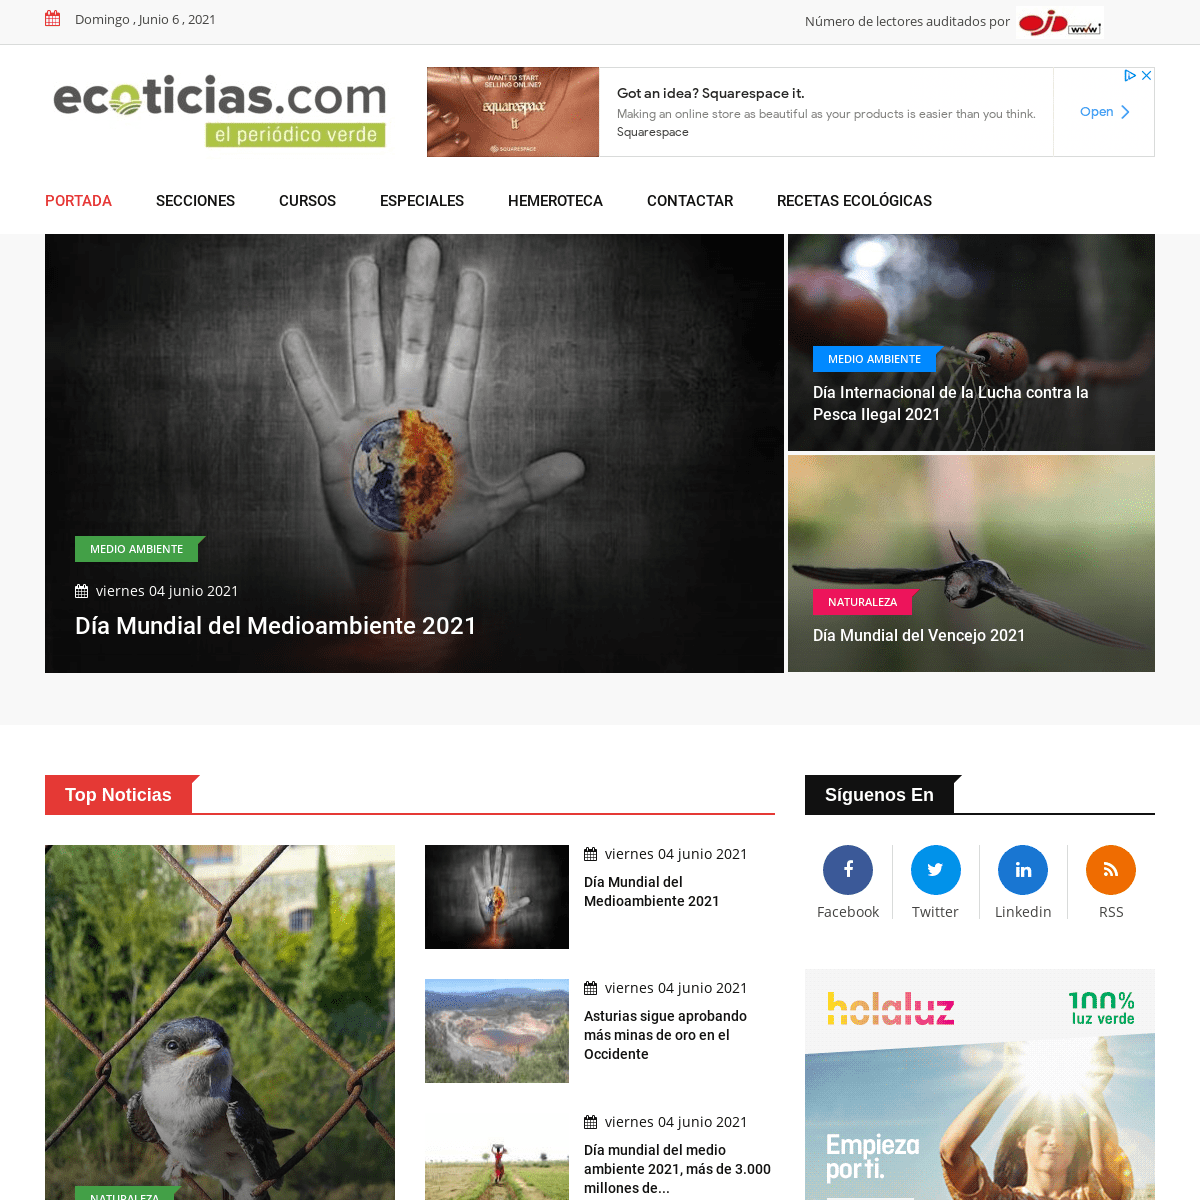 A complete backup of https://ecoticias.com